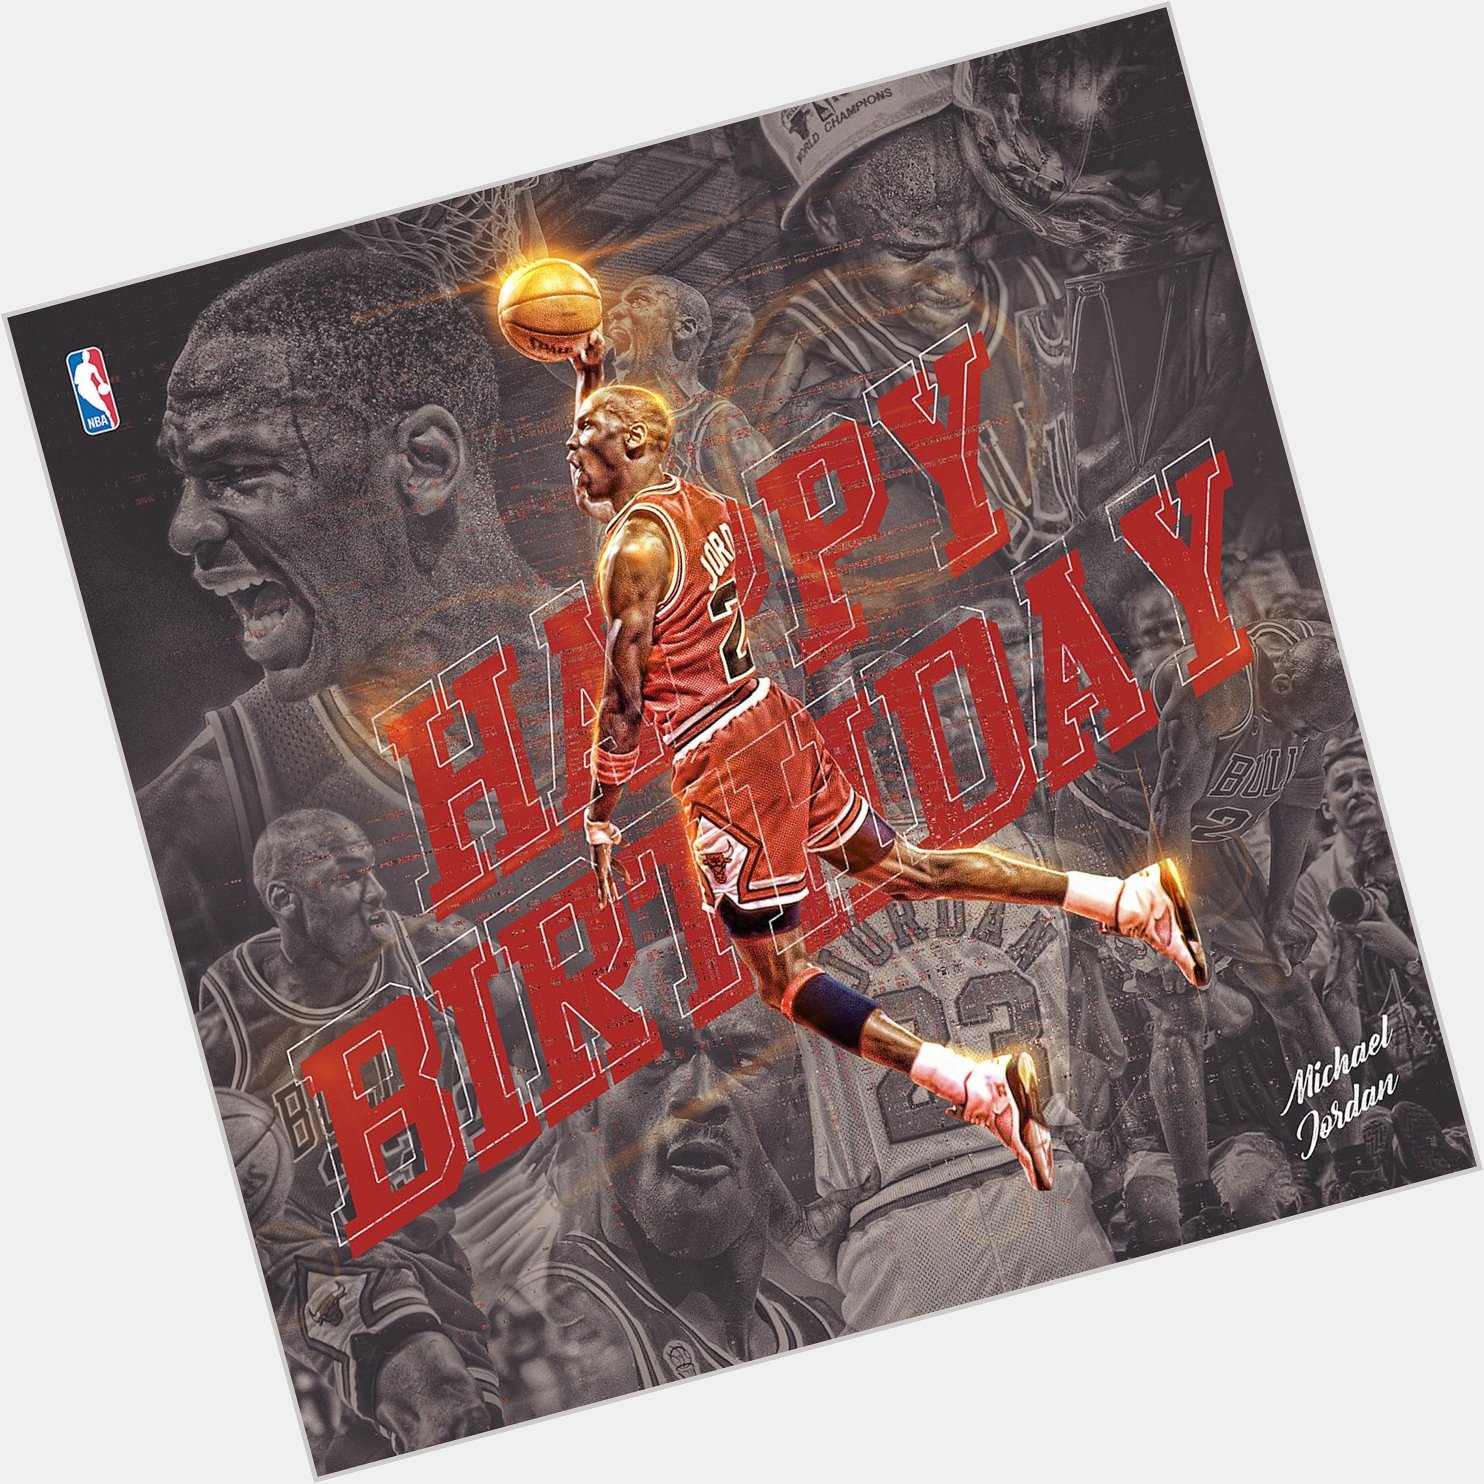 Happy 54th birthday to the great Michael Jordan. 